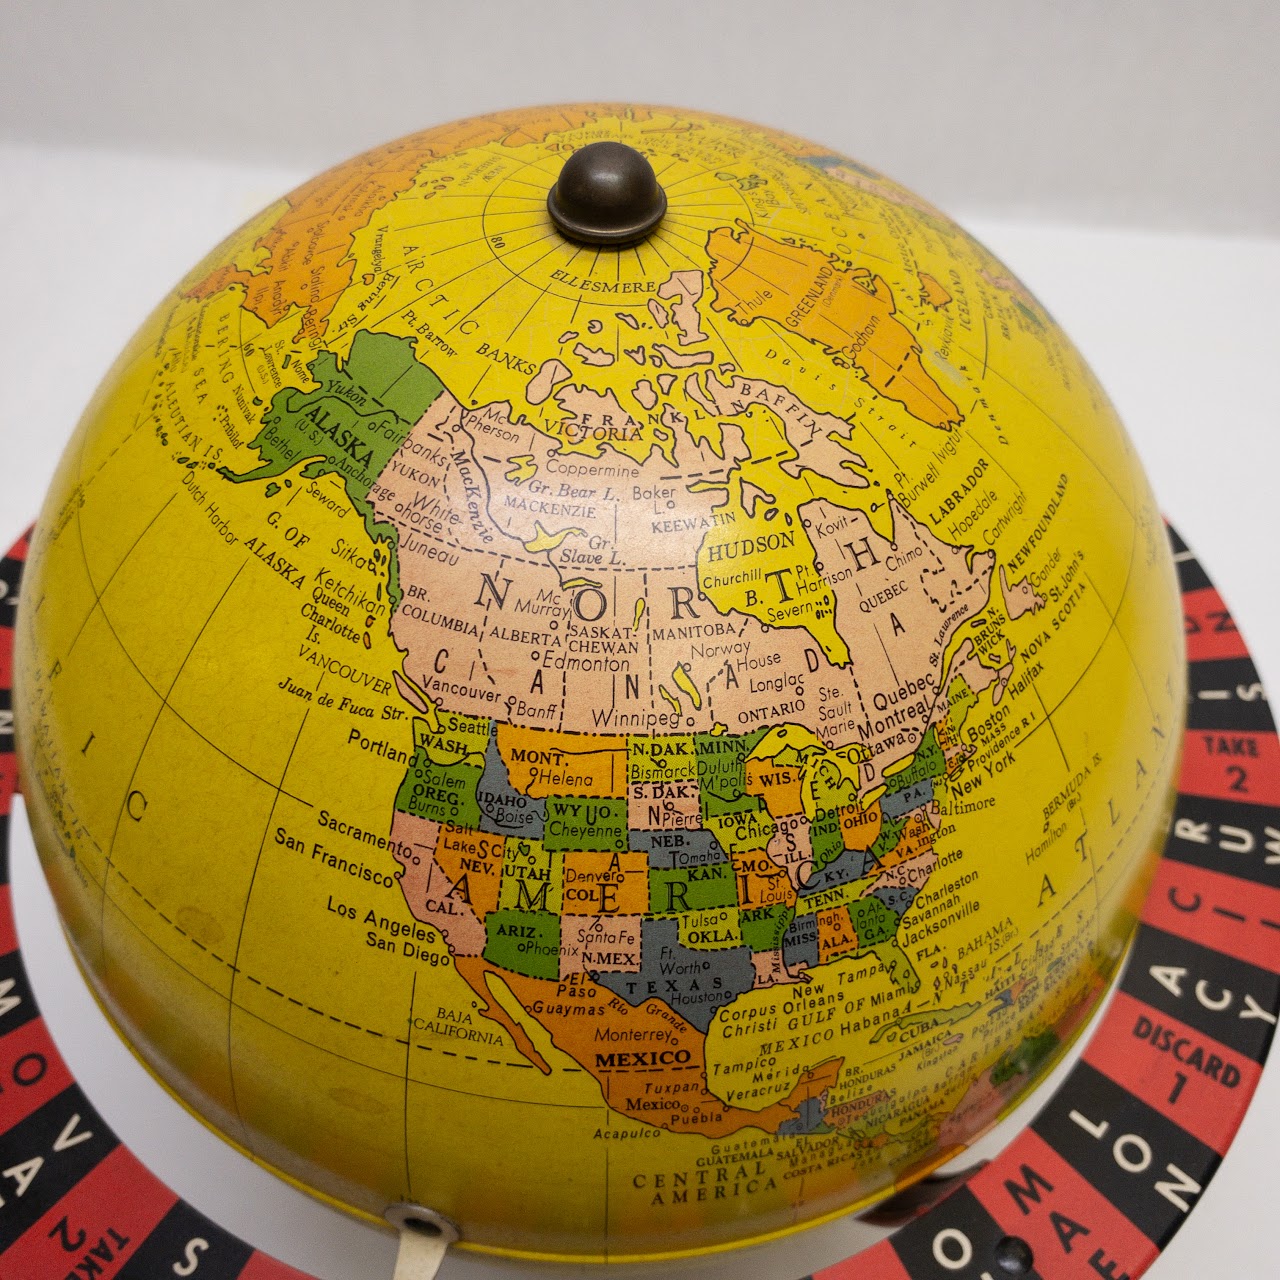 Replogle Globes Inc. Tin Globe